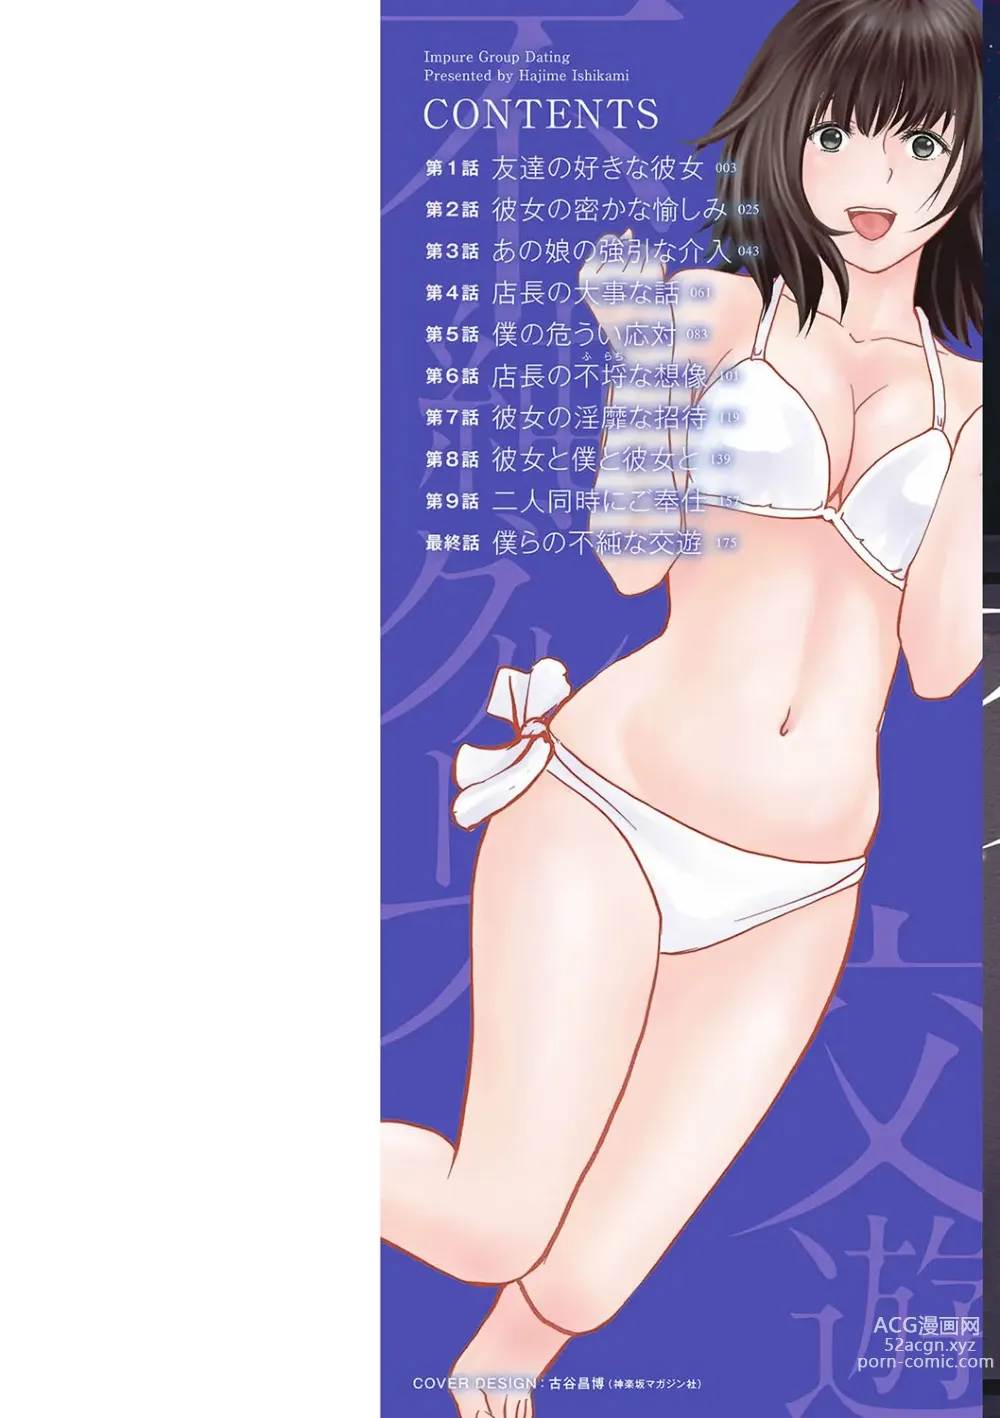 Page 2 of manga Fujun Group Kouyuu - Impure Group Dating